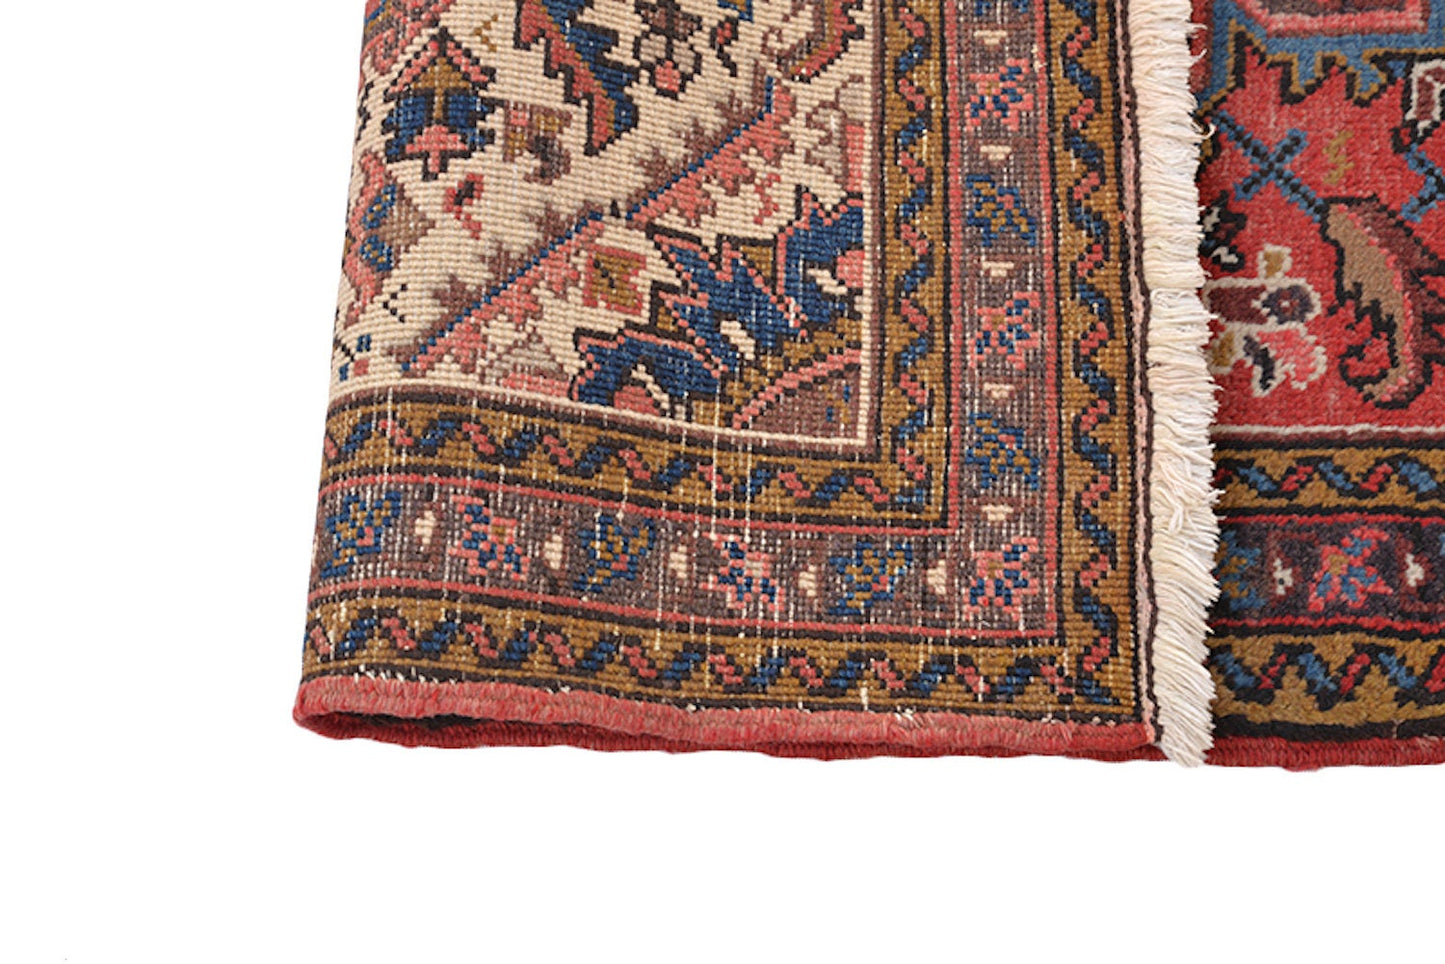 7 Feet x 4'7 Feet | Vintage Oriental Rug | Pink Red Medallion | Blue Border | Boho Chic Rustic Rug | Accent Rug | Wool Antique Rug